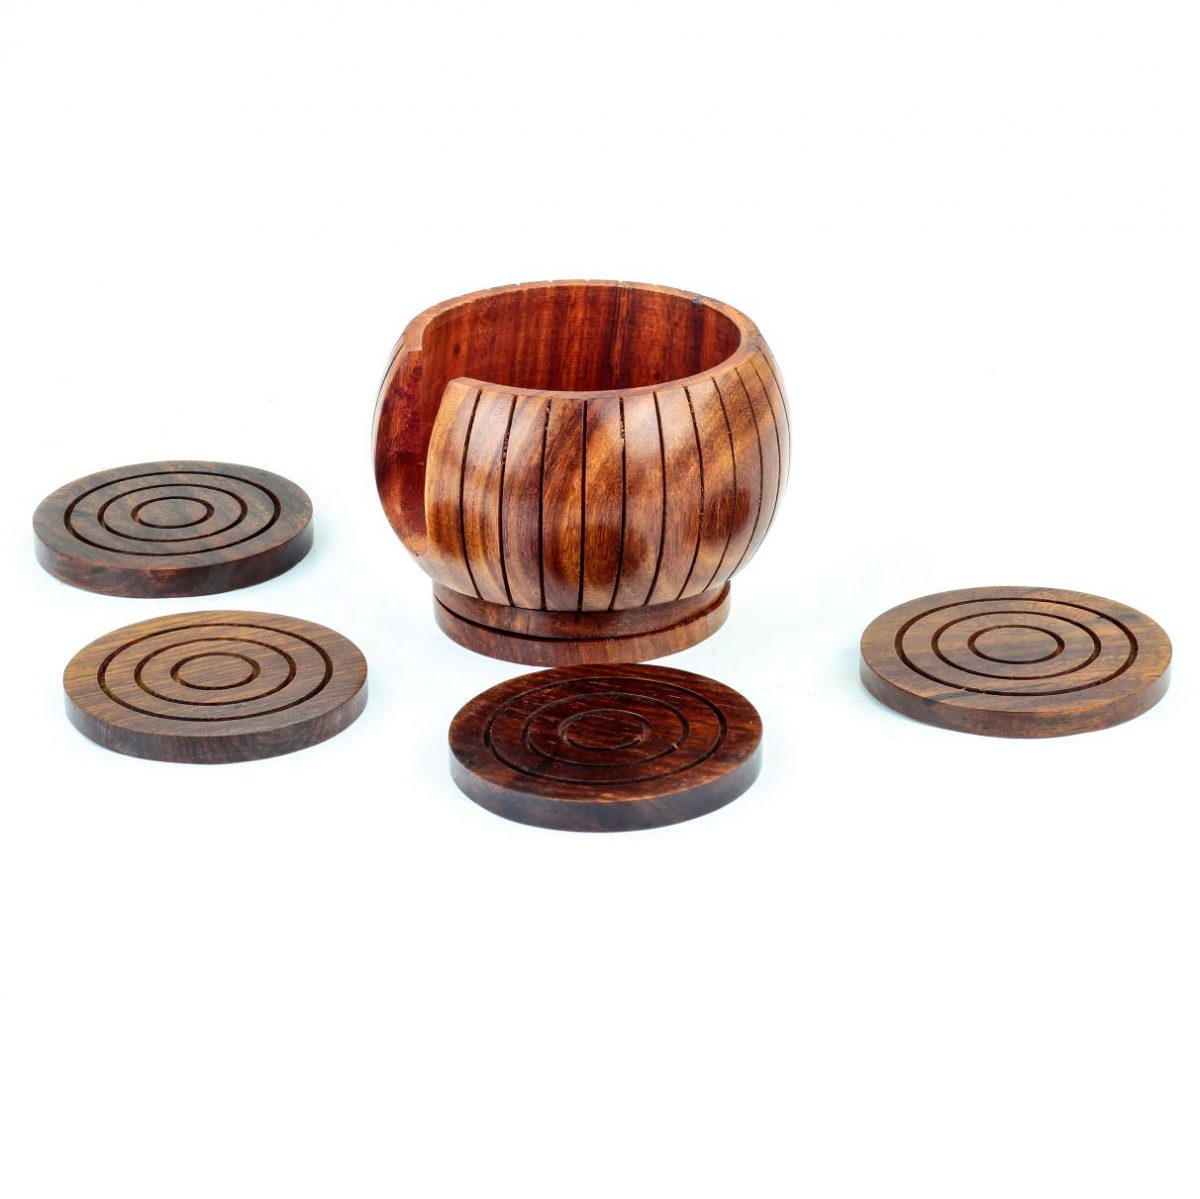 Nagina International Handcrafted Wooden Drink Coasters Set of 6 with Holder| Kitchen & Barware Accessories